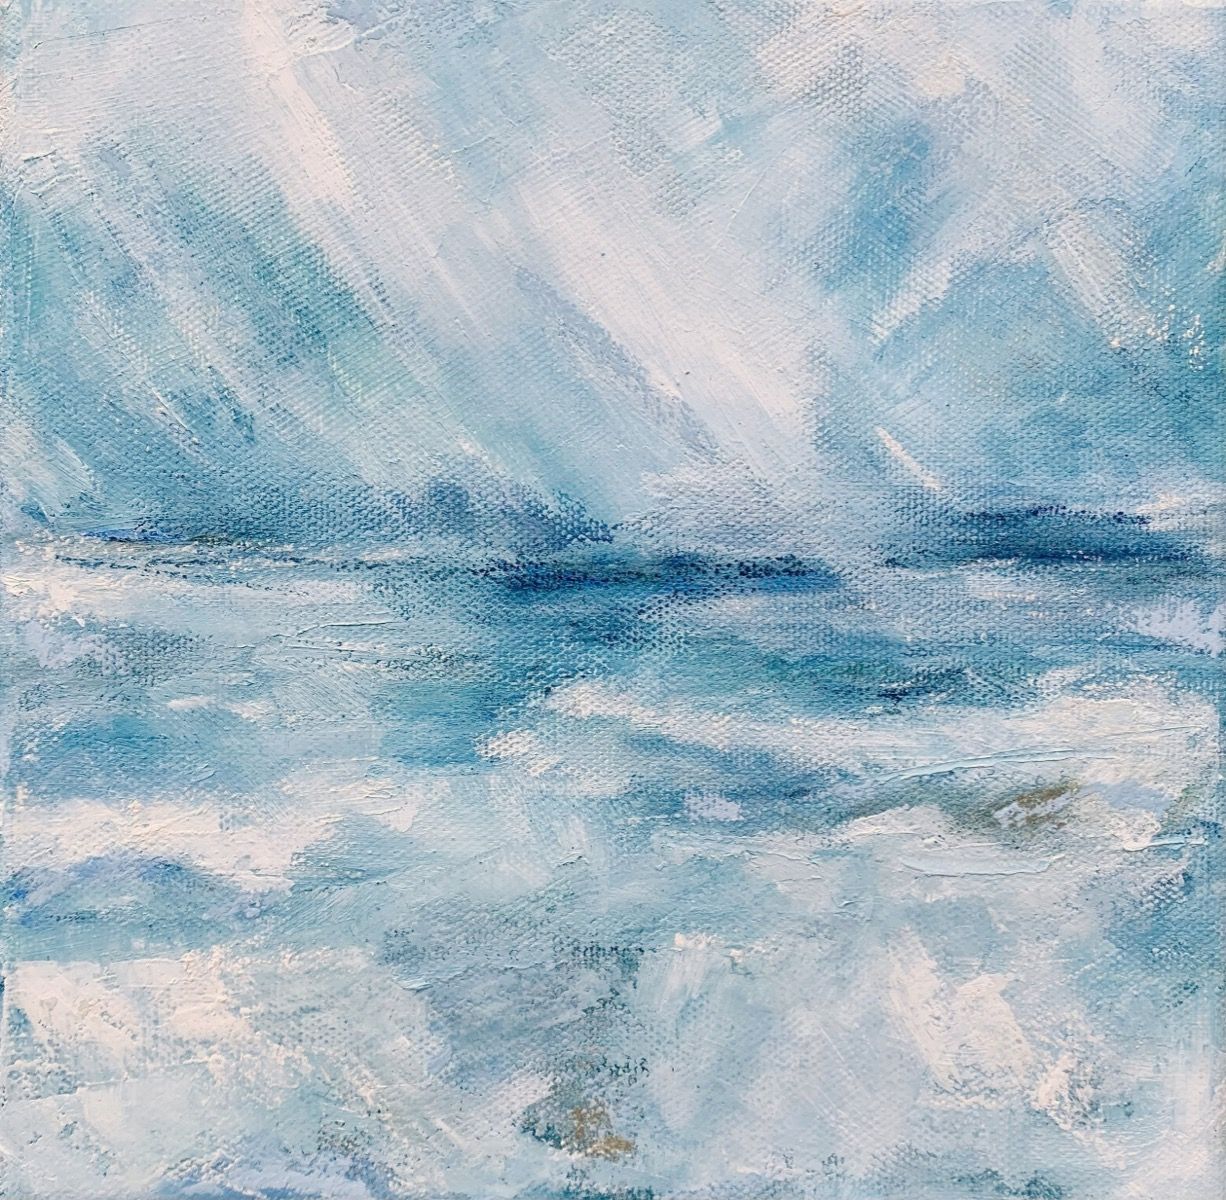 Where The Sky Meets The Sea by Christina Sadler